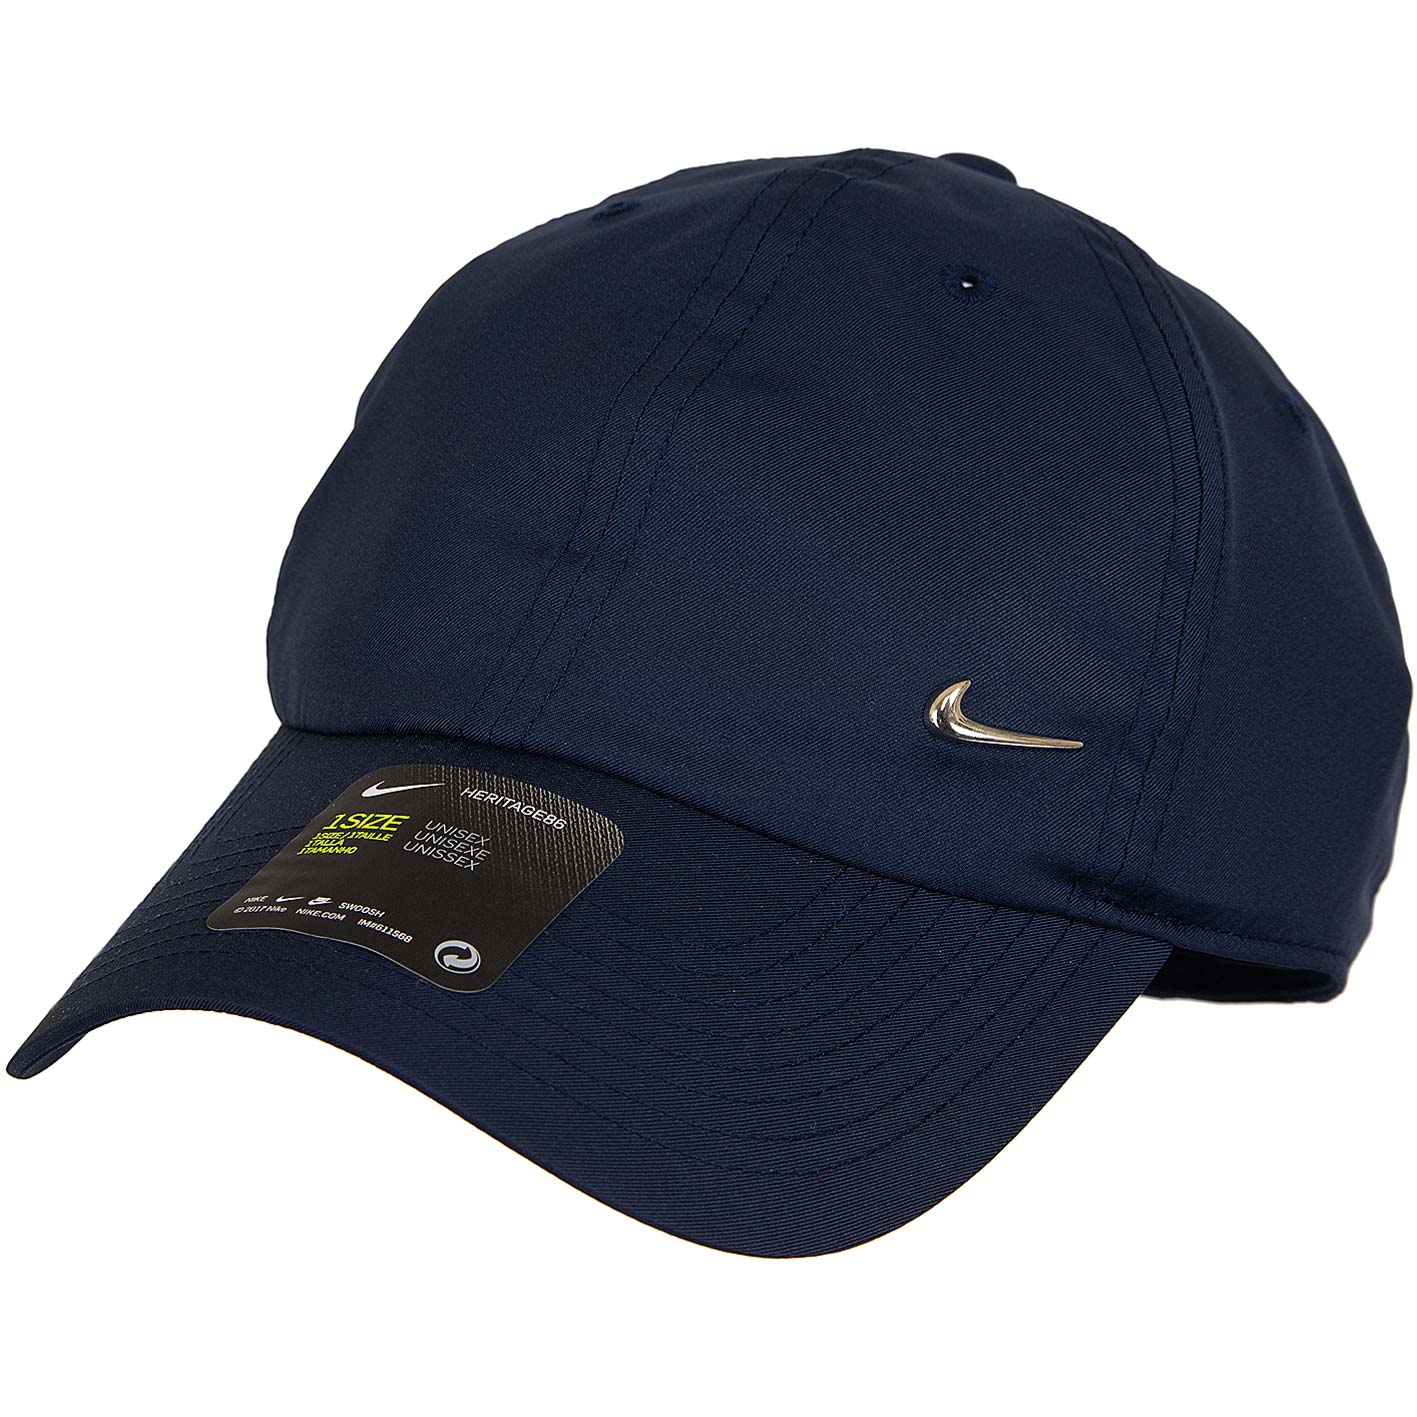 ☆ Nike Cap H86 Metal Swoosh dunkelblau - hier bestellen!